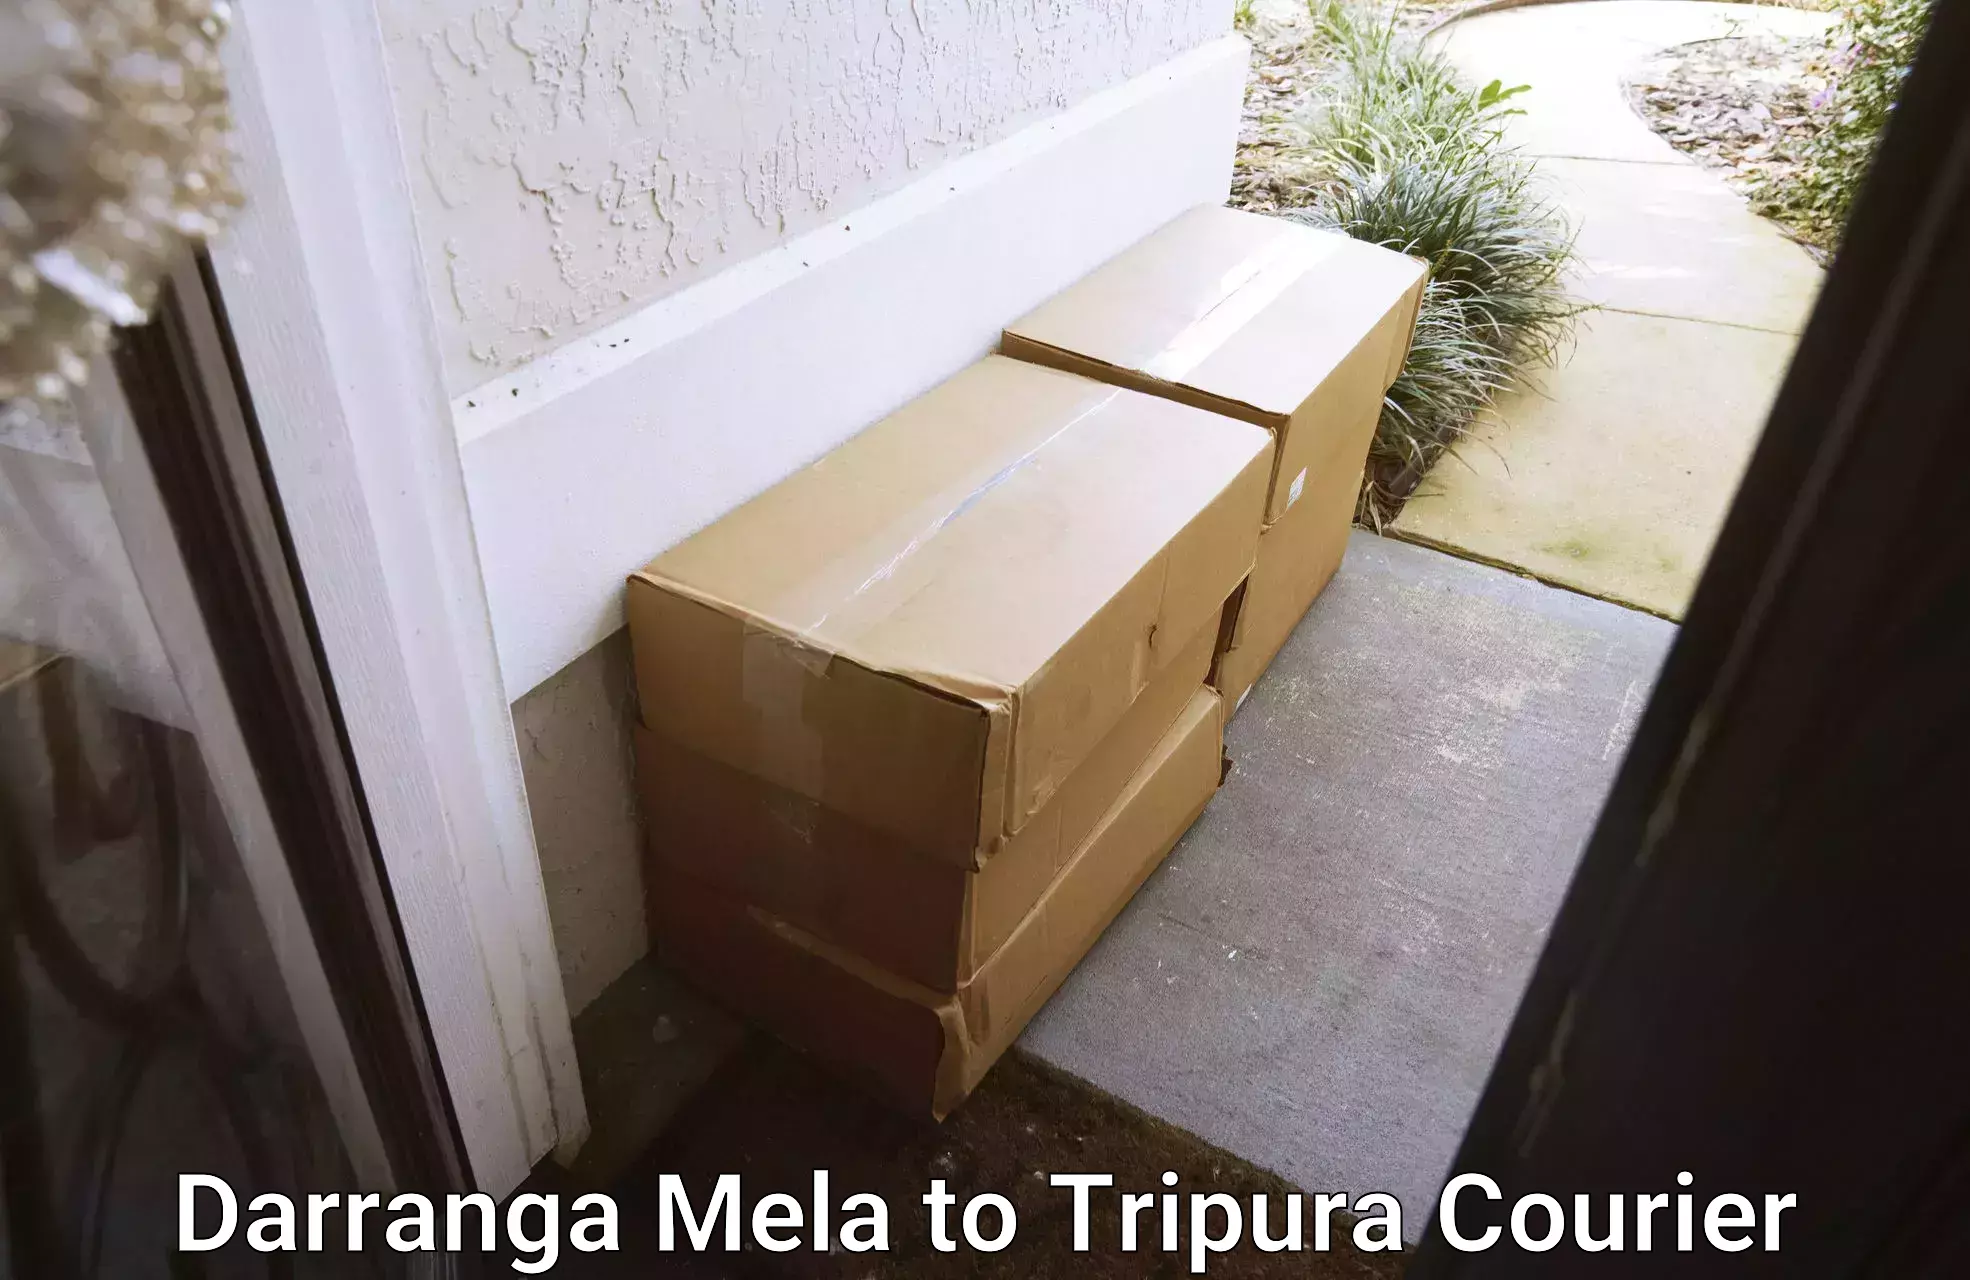 Diverse delivery methods in Darranga Mela to Tripura